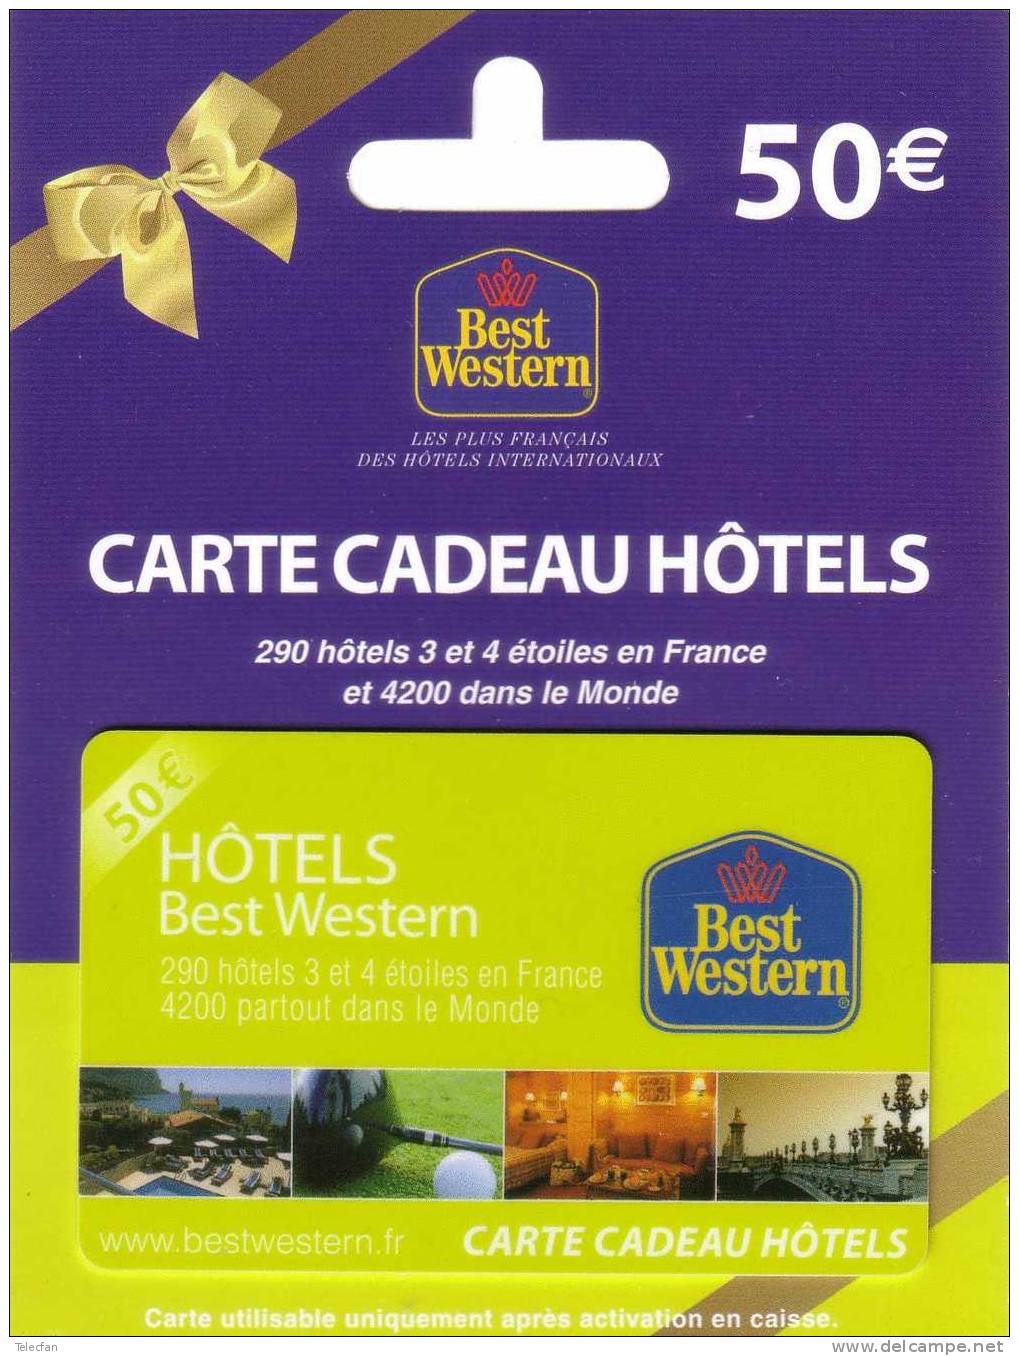 CARTE CADEAU HOTELS BEST WESTERN JAUNE 50 € ENCART ORIGINE NEUVE MINT IN ORIGINAL FOLDER - Cartes De Fidélité Et Cadeau